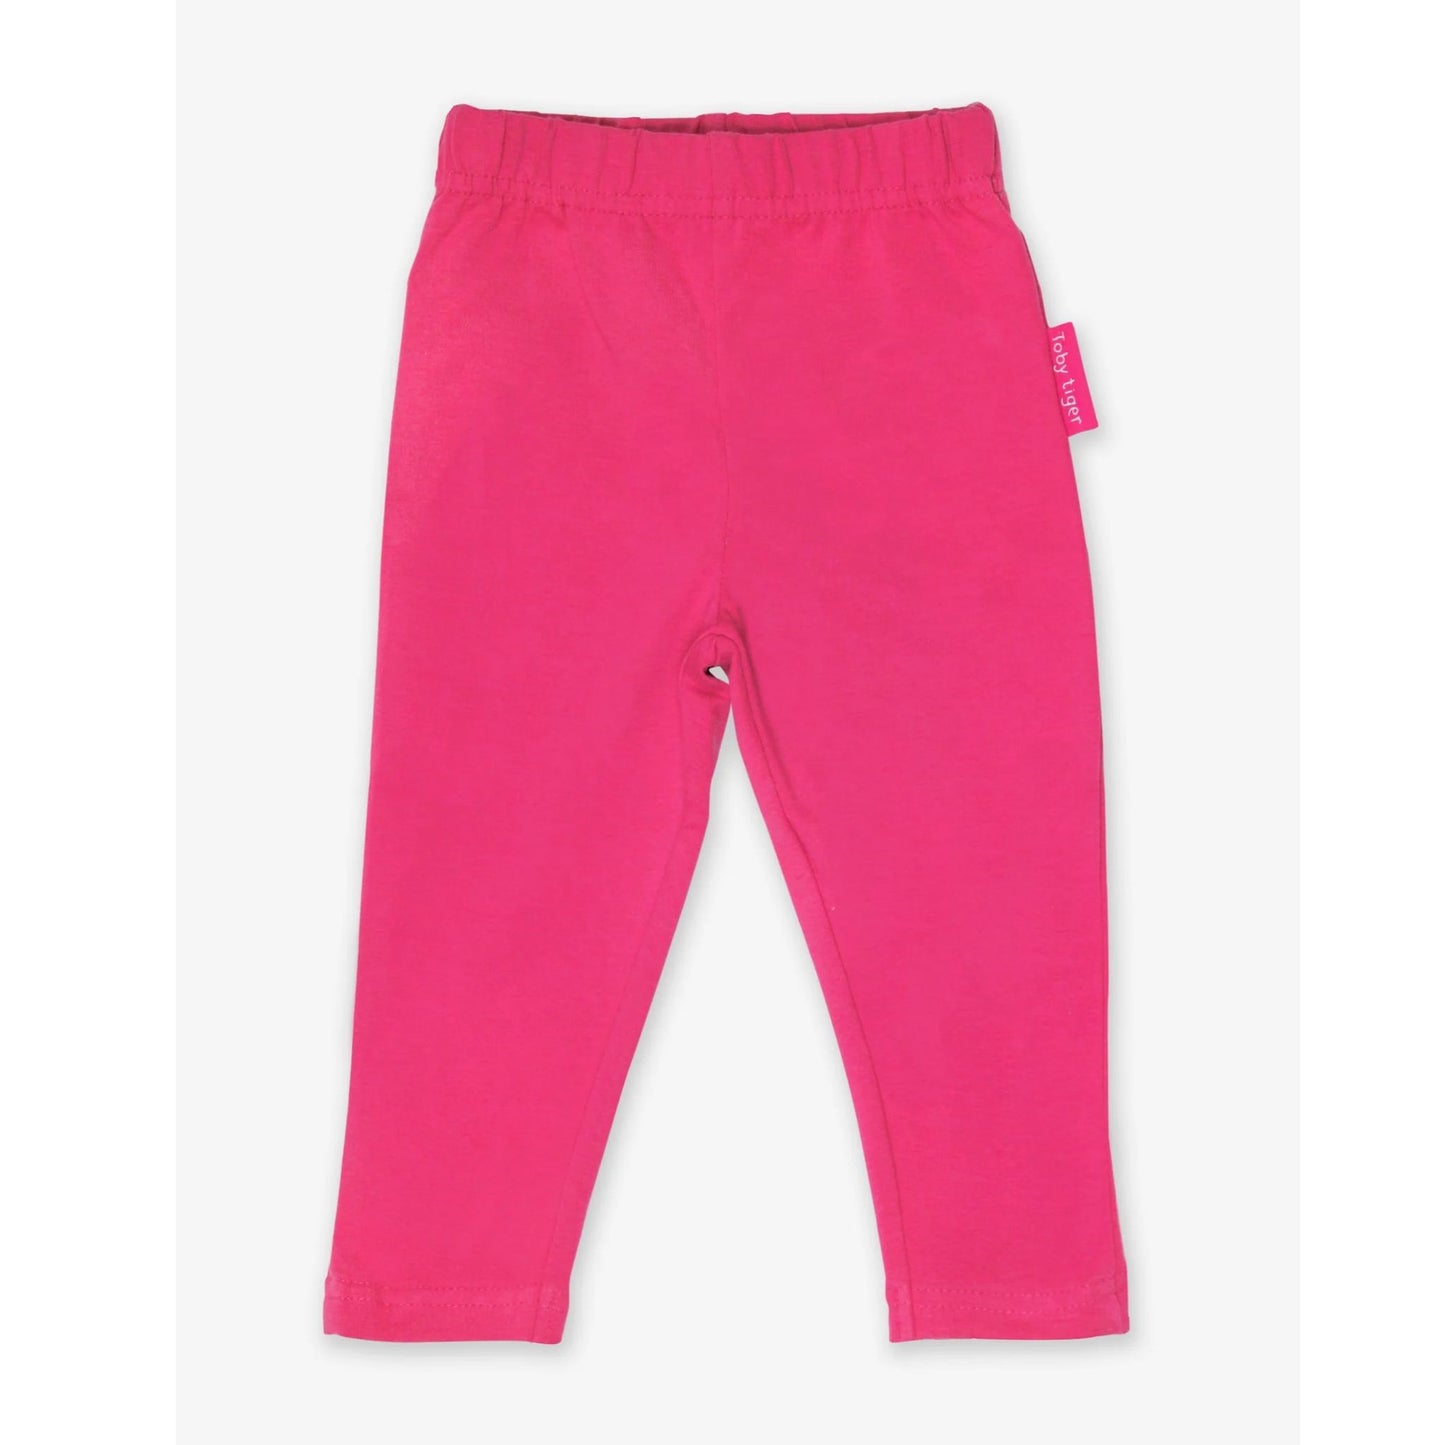 Toby Tiger leggings - pink